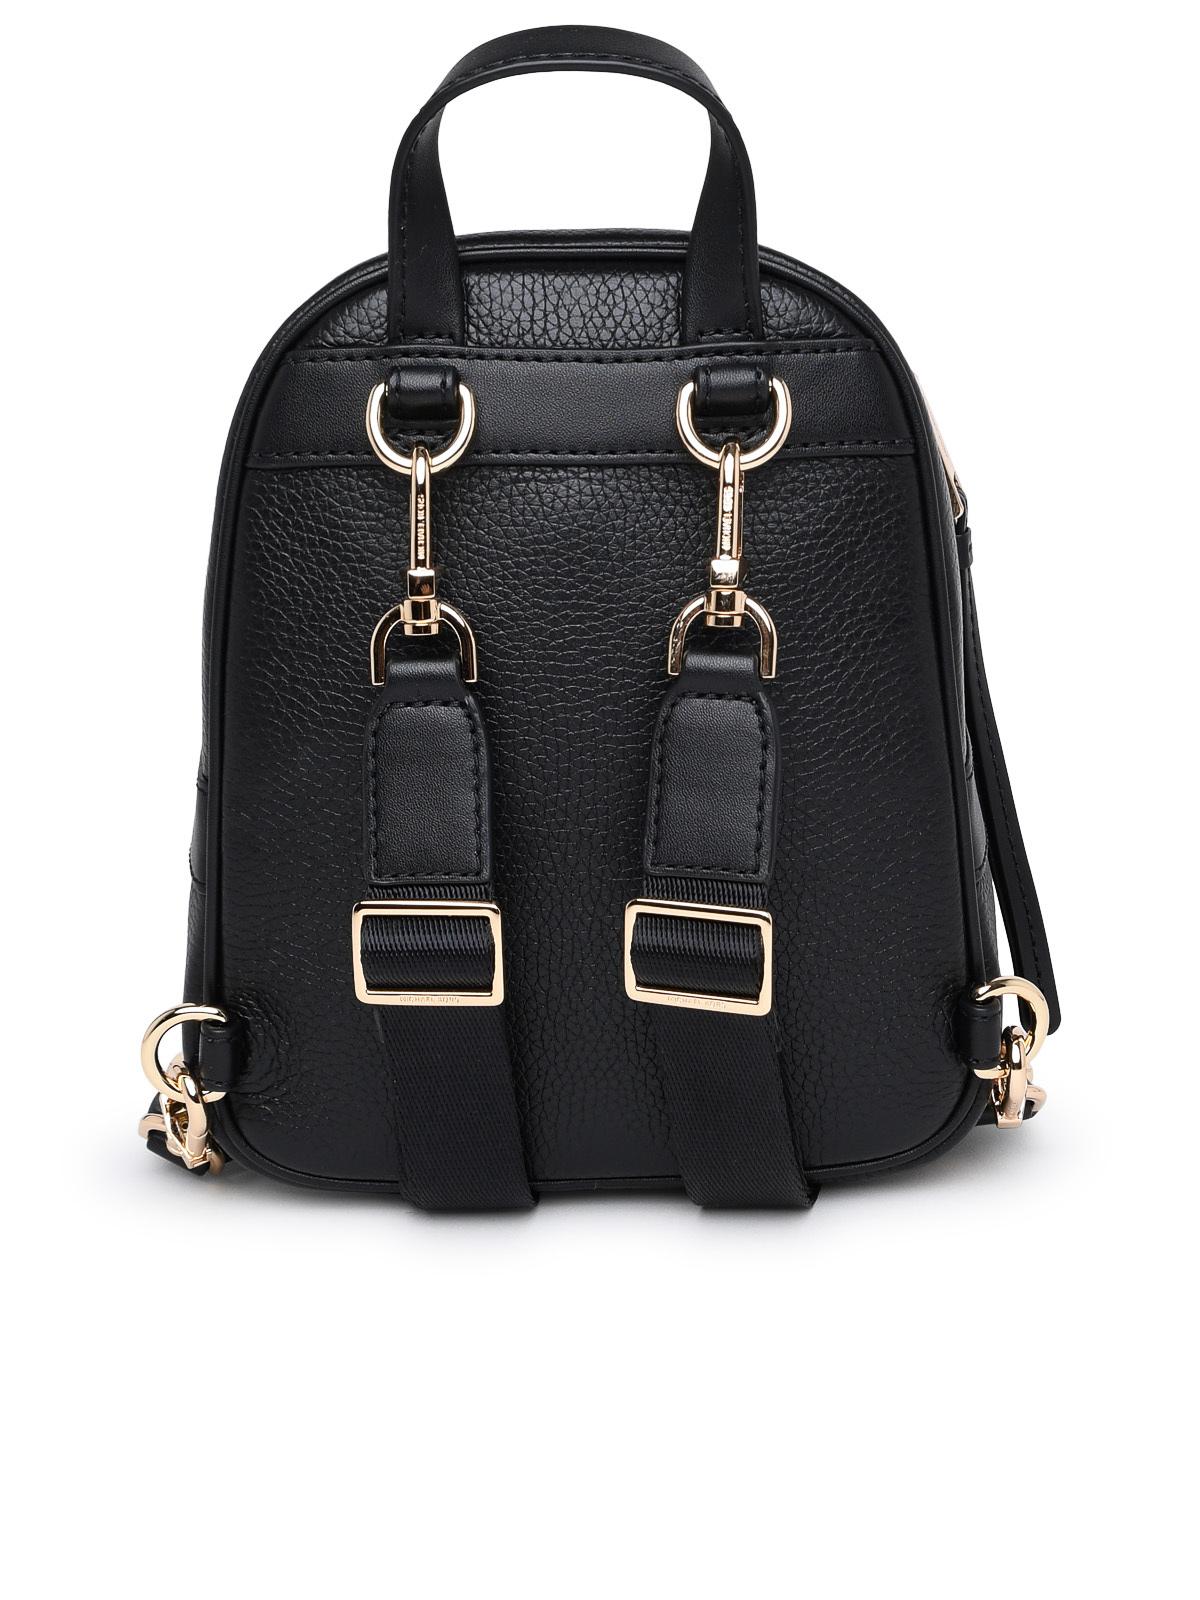 Michael Kors Erin Backpack studded small Convertible crossbody Leather bag  193599717579 | eBay